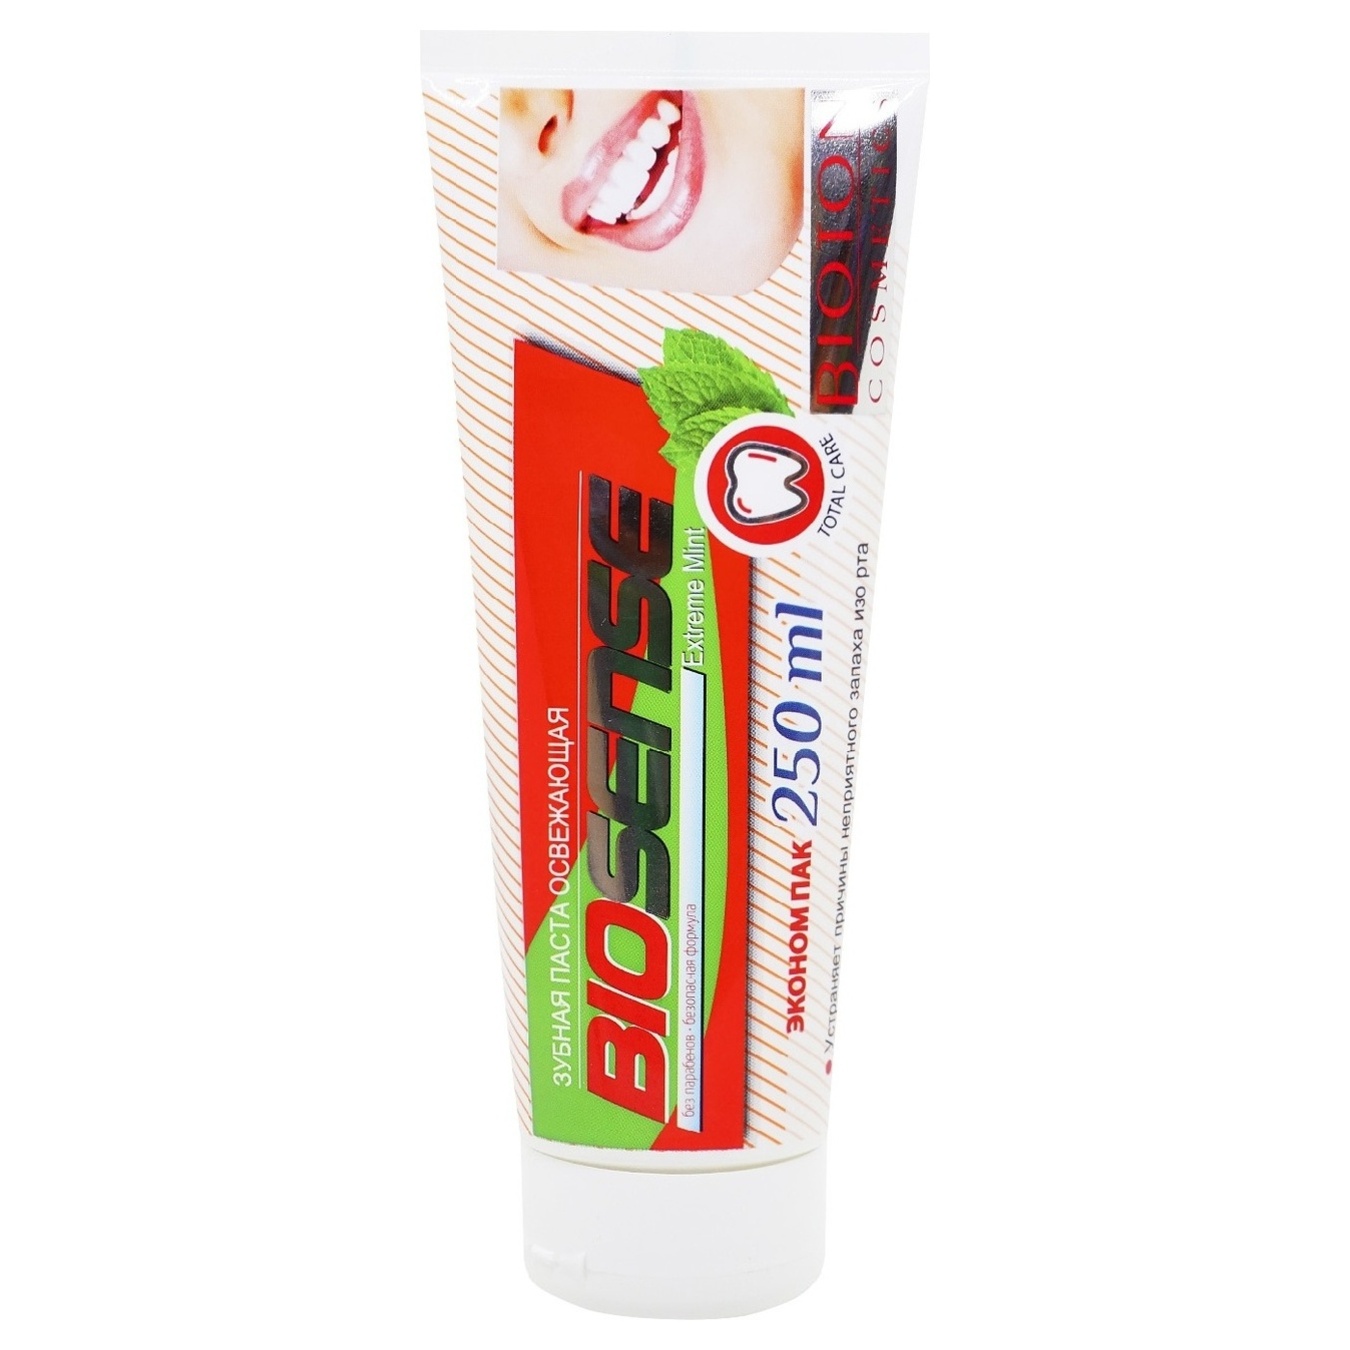 Toothpaste Bioton Biosence Extreme Mint economy pack 250ml